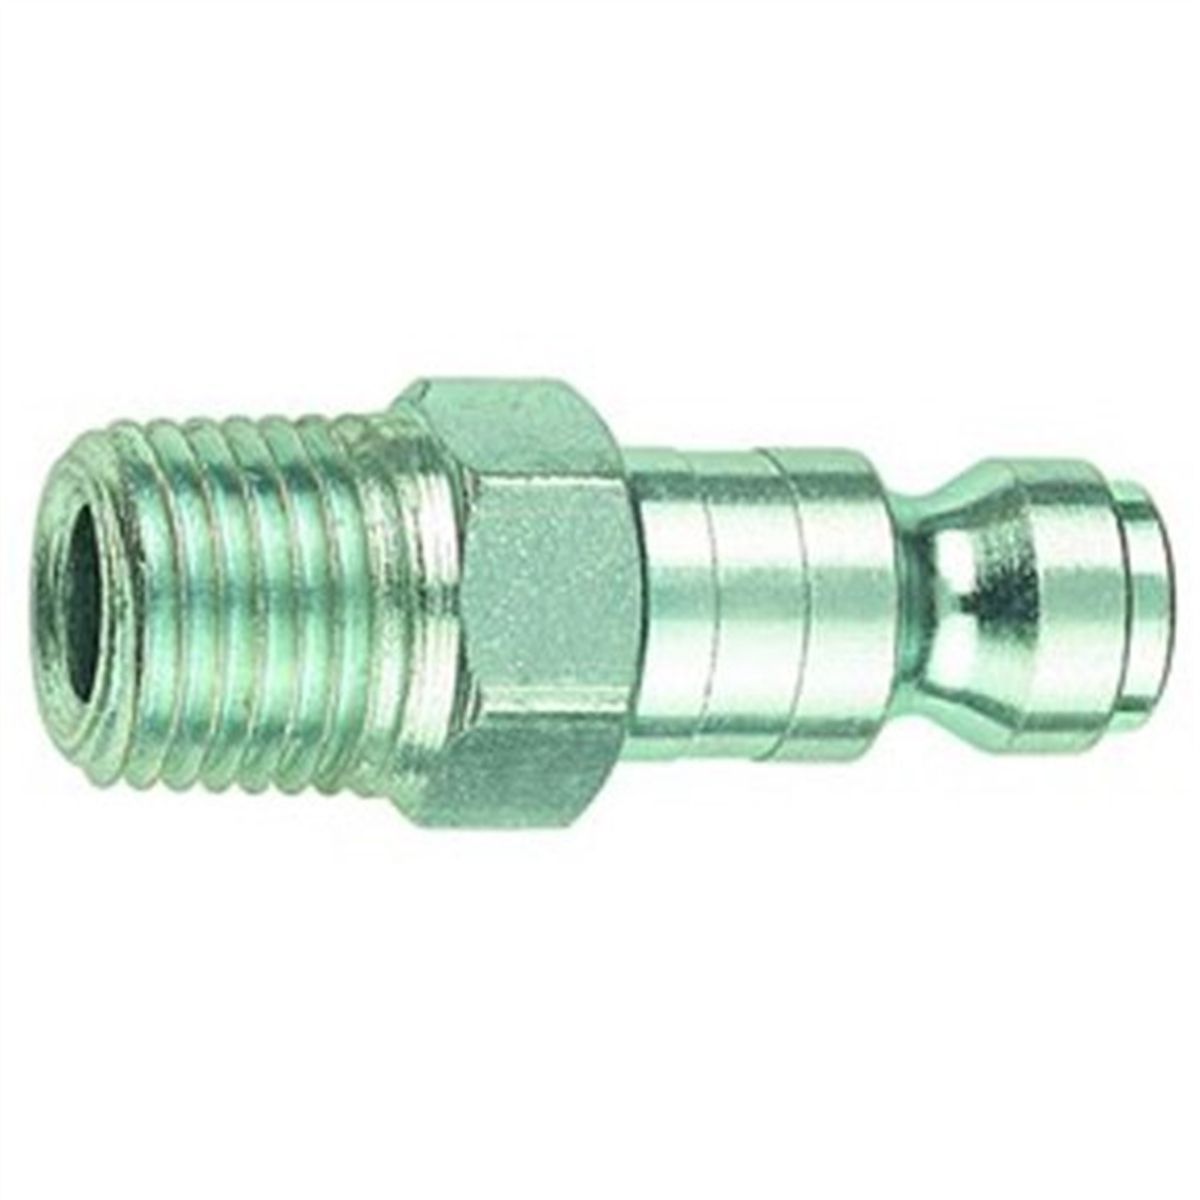 Male Thread Automotive Standard Coupler Plug - Type G - 3/8 In N